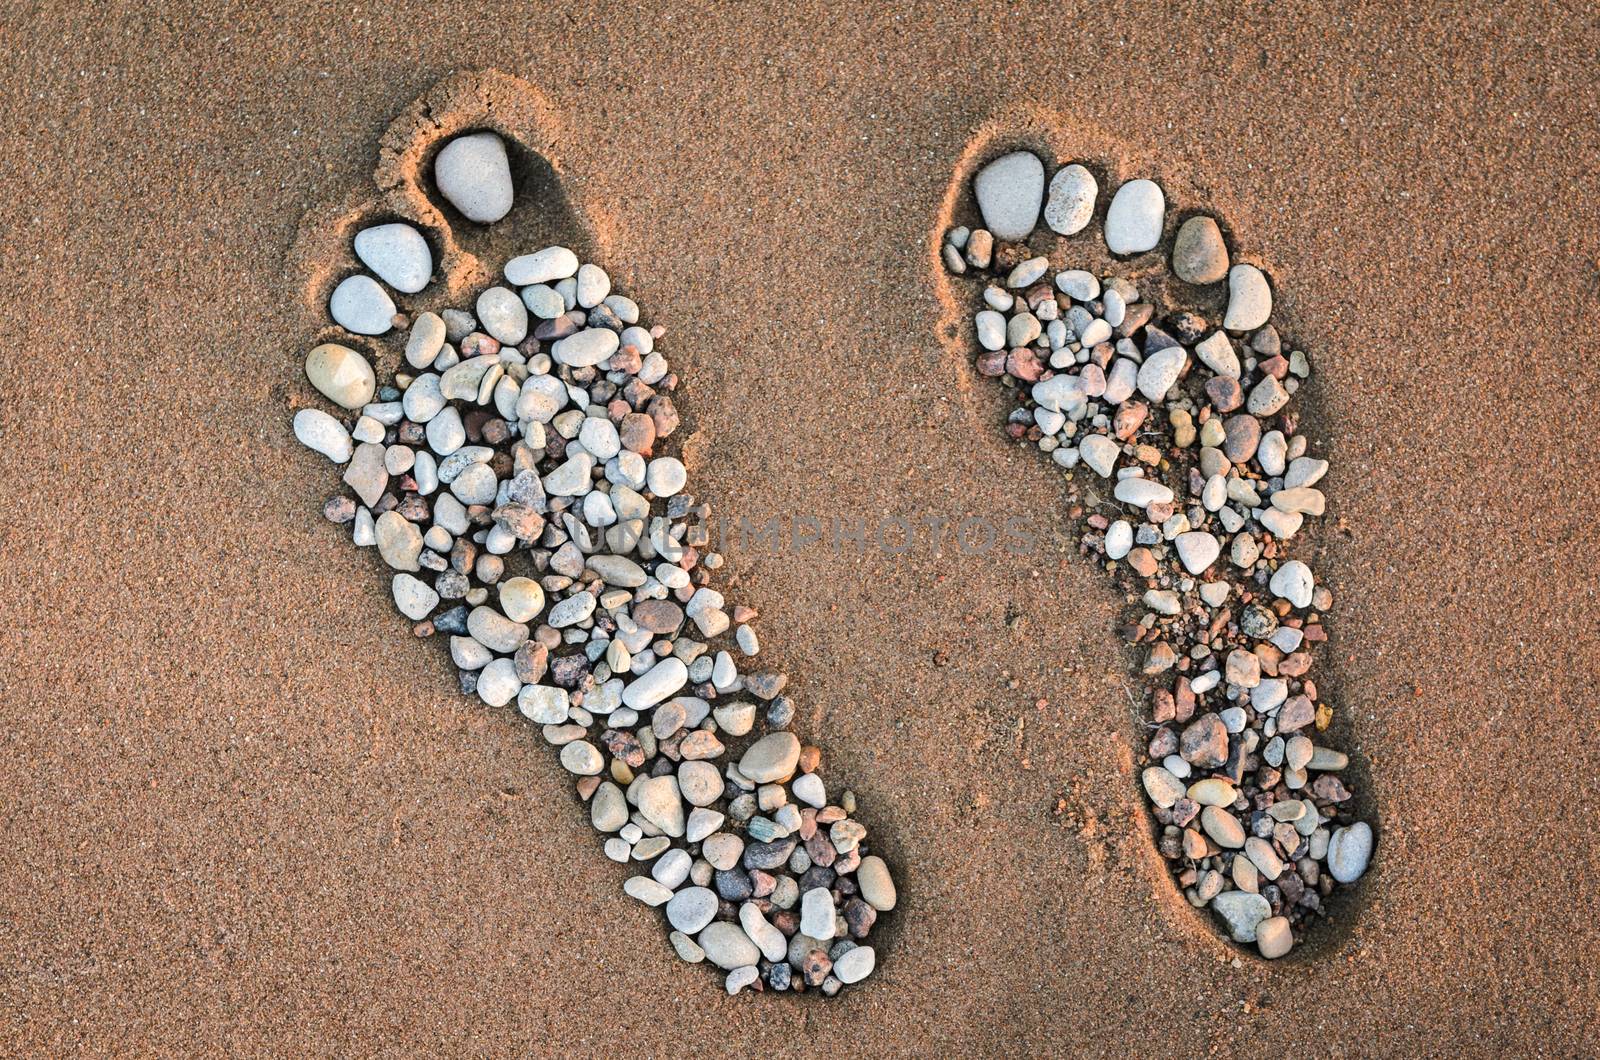 Bare feet made of pebble on the sandy beach